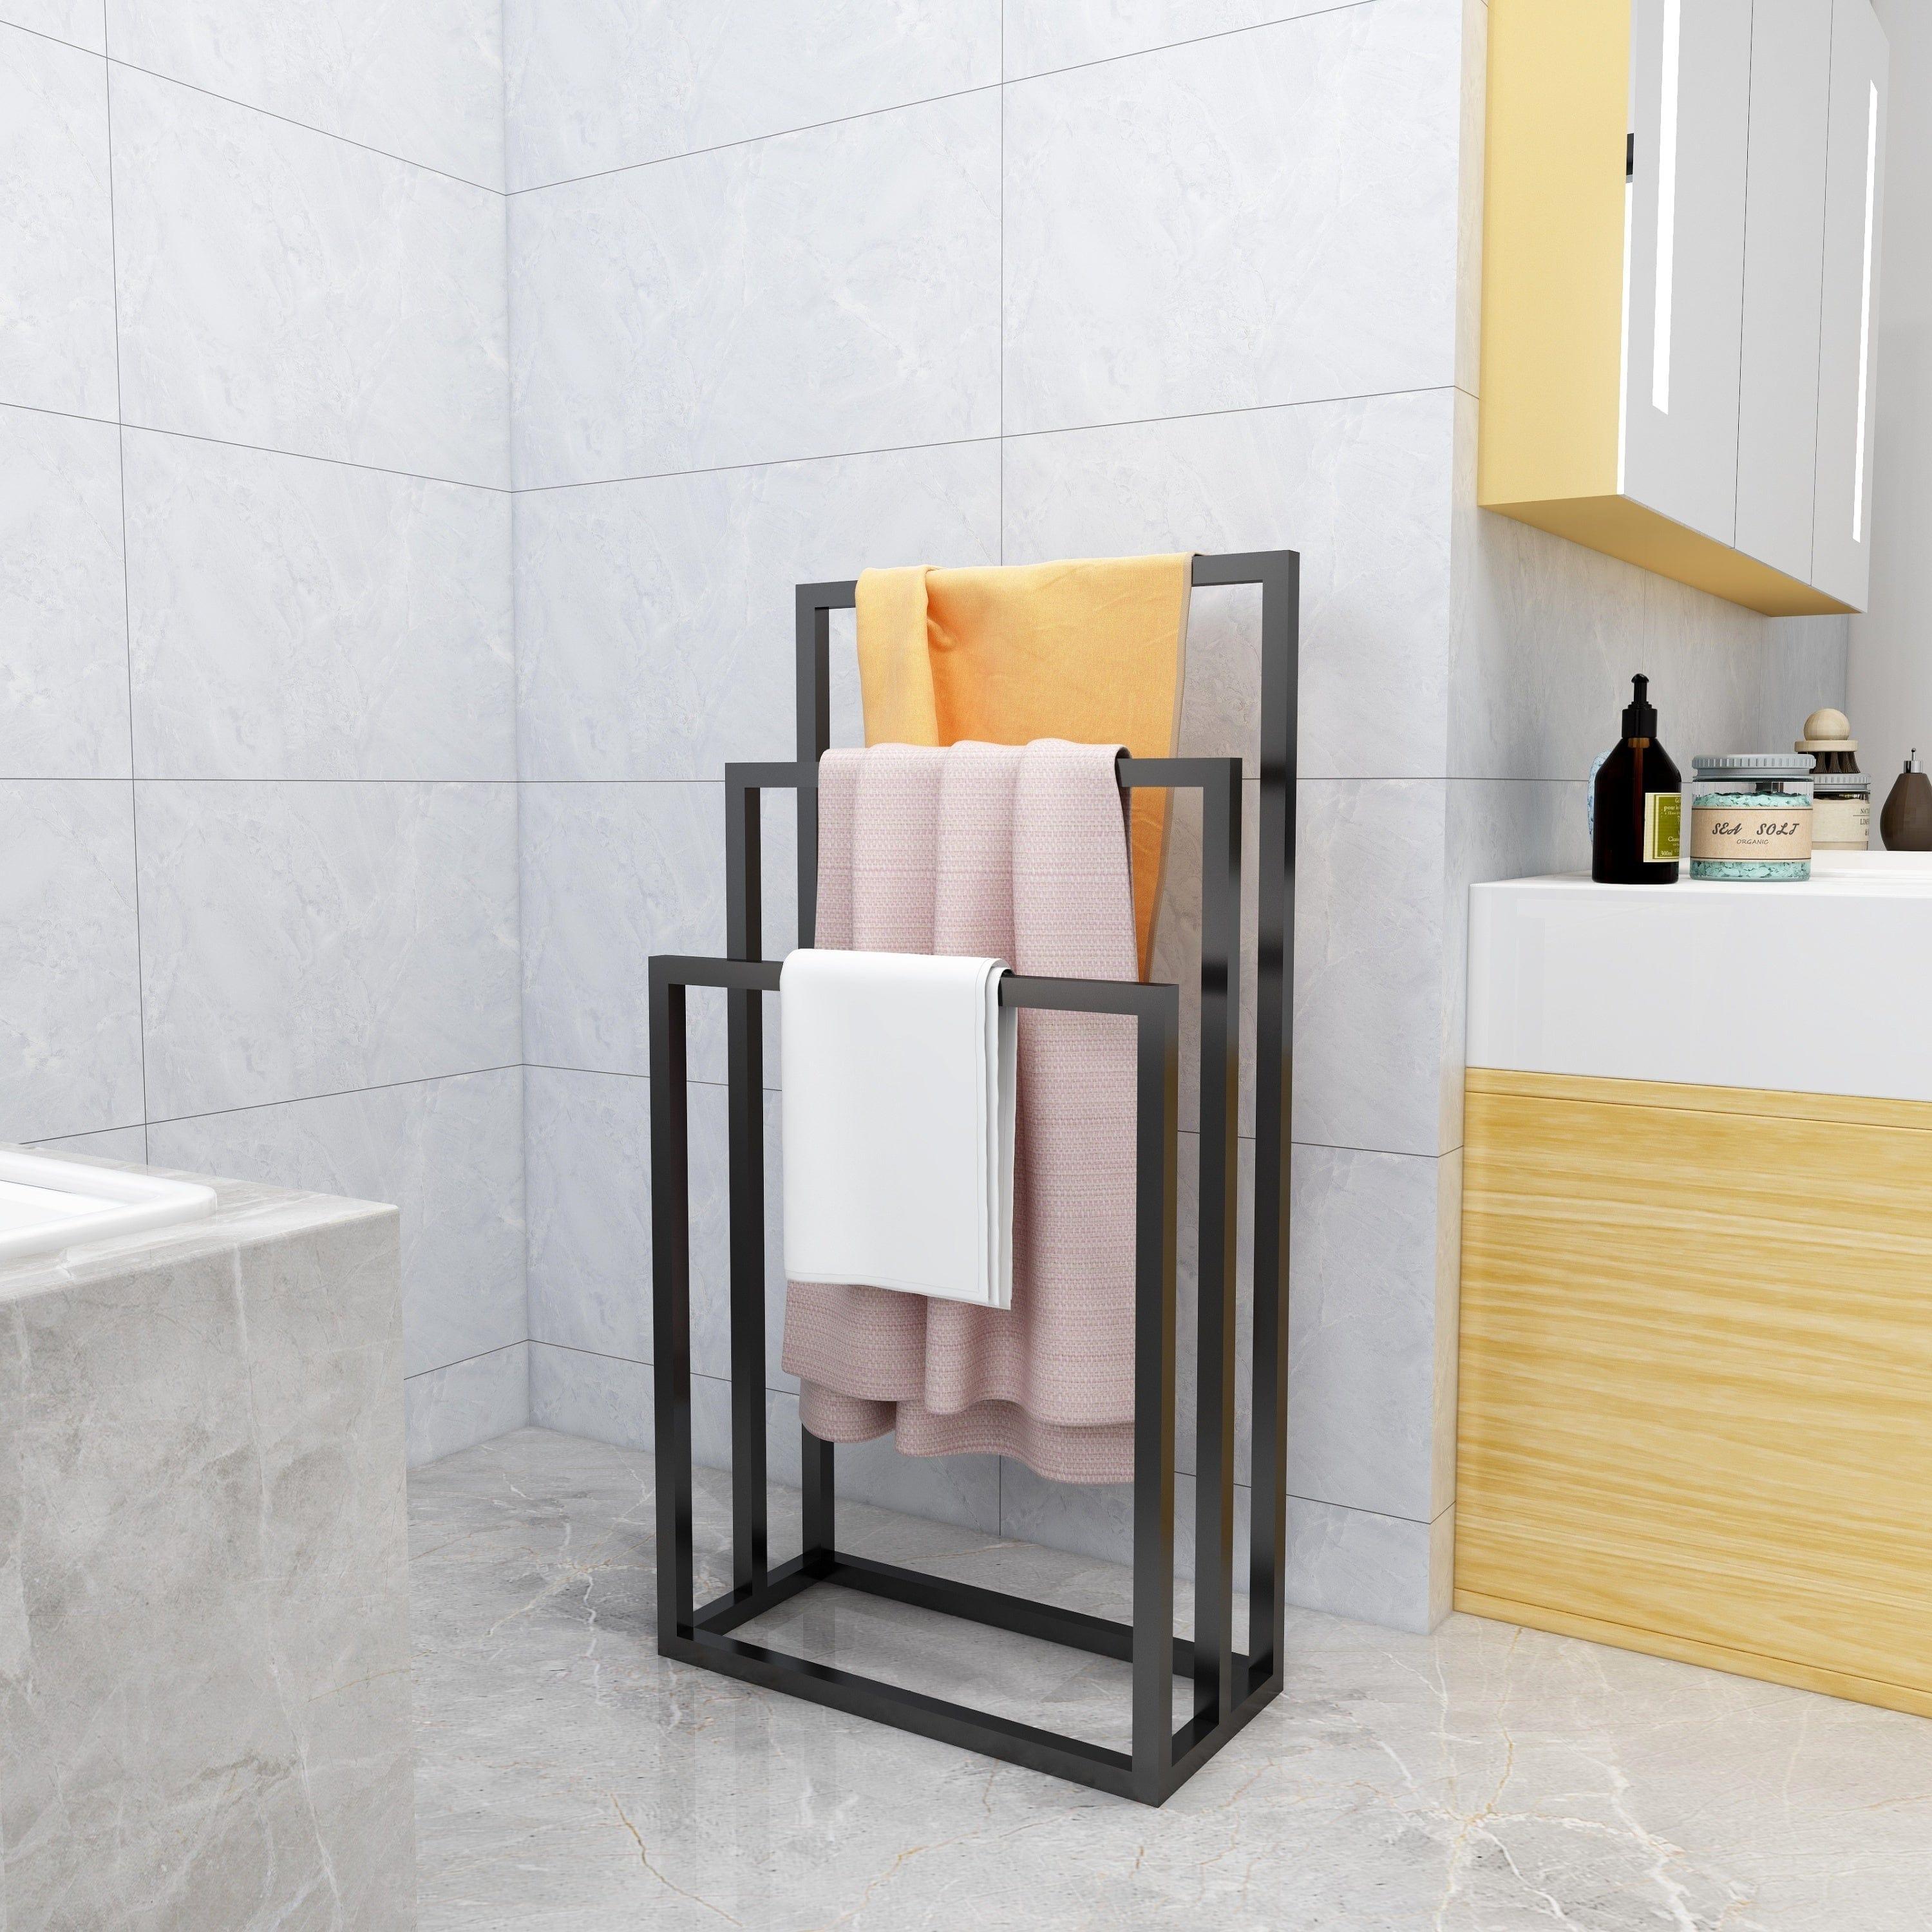 Shop Metal Freestanding Towel Rack 3 Tiers Hand Towel Holder Organizer for Bathroom Accessories, Black Mademoiselle Home Decor